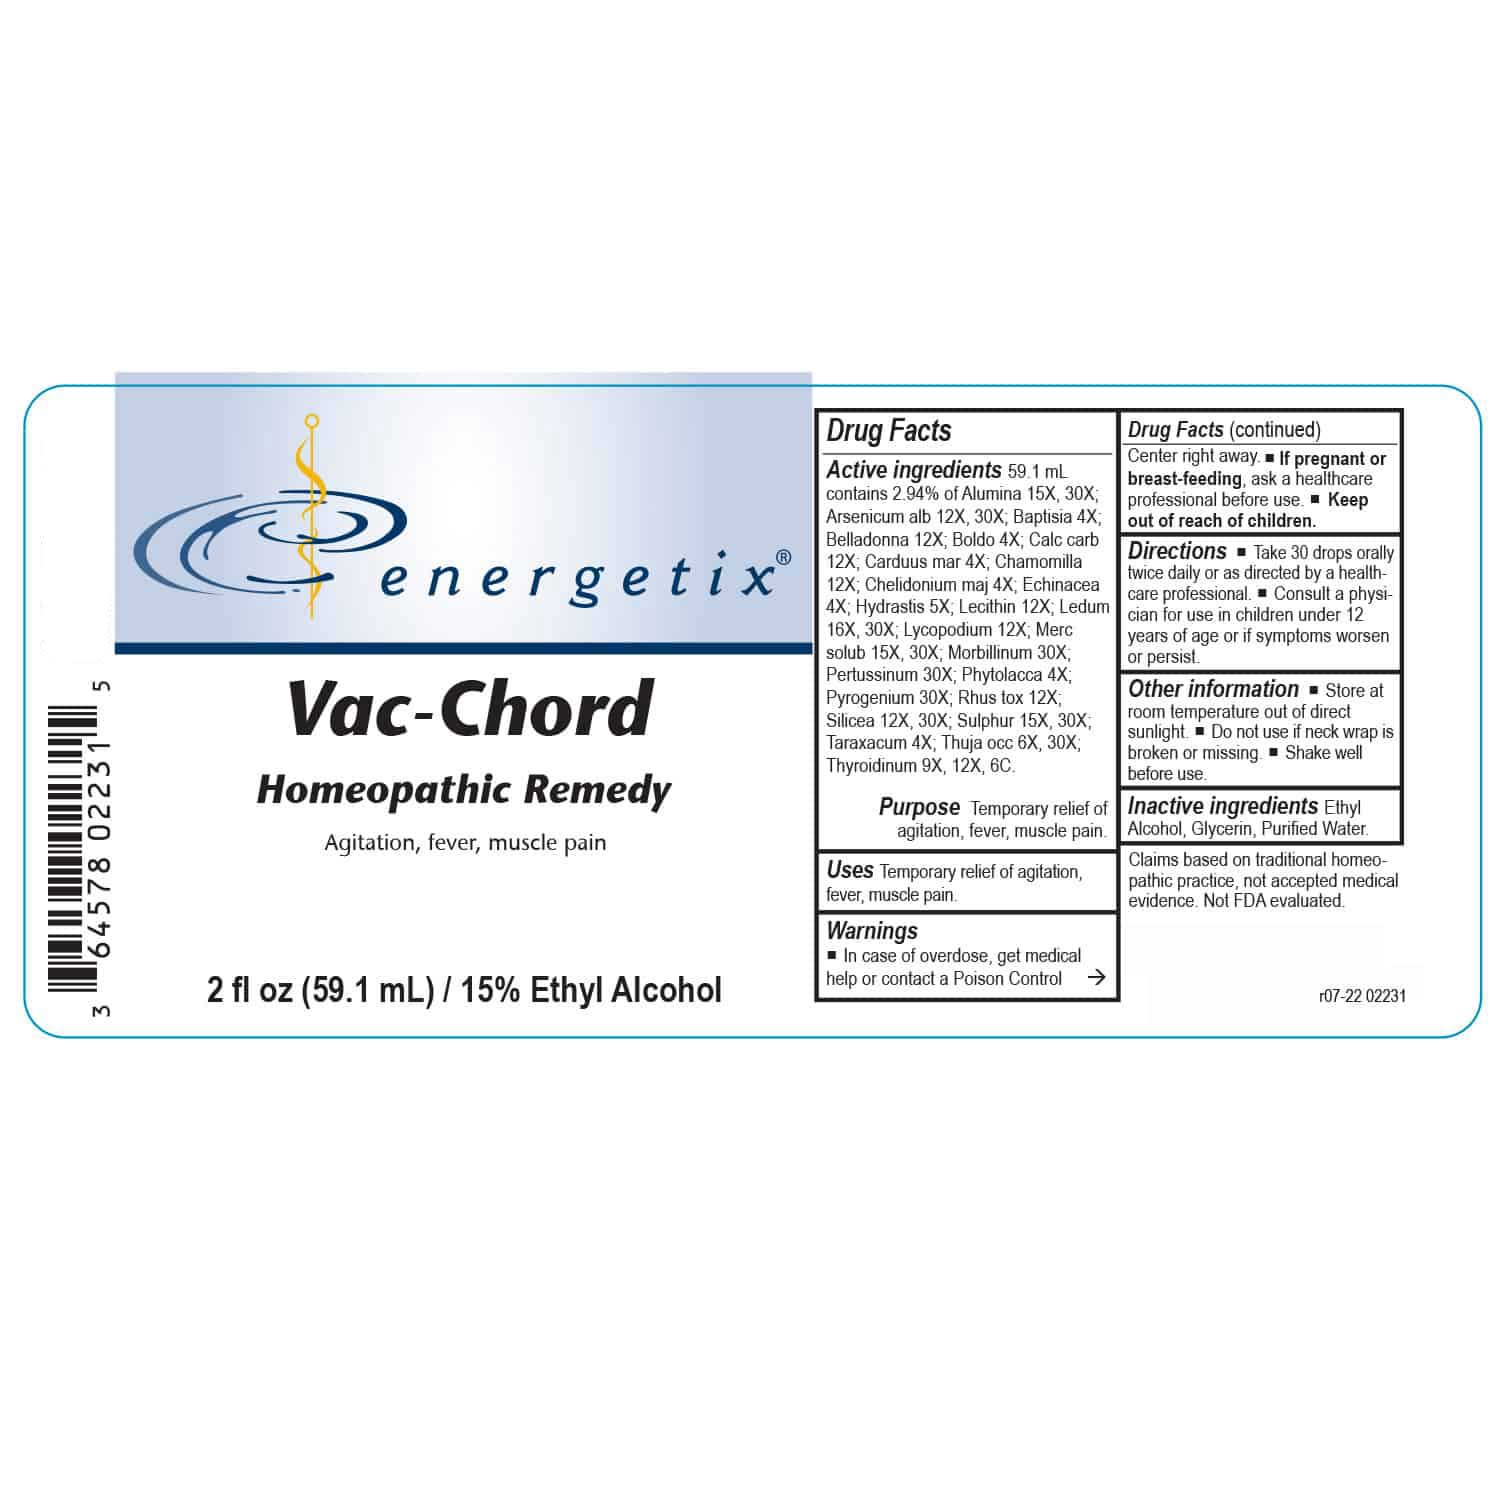 Energetix Vac-Chord Label